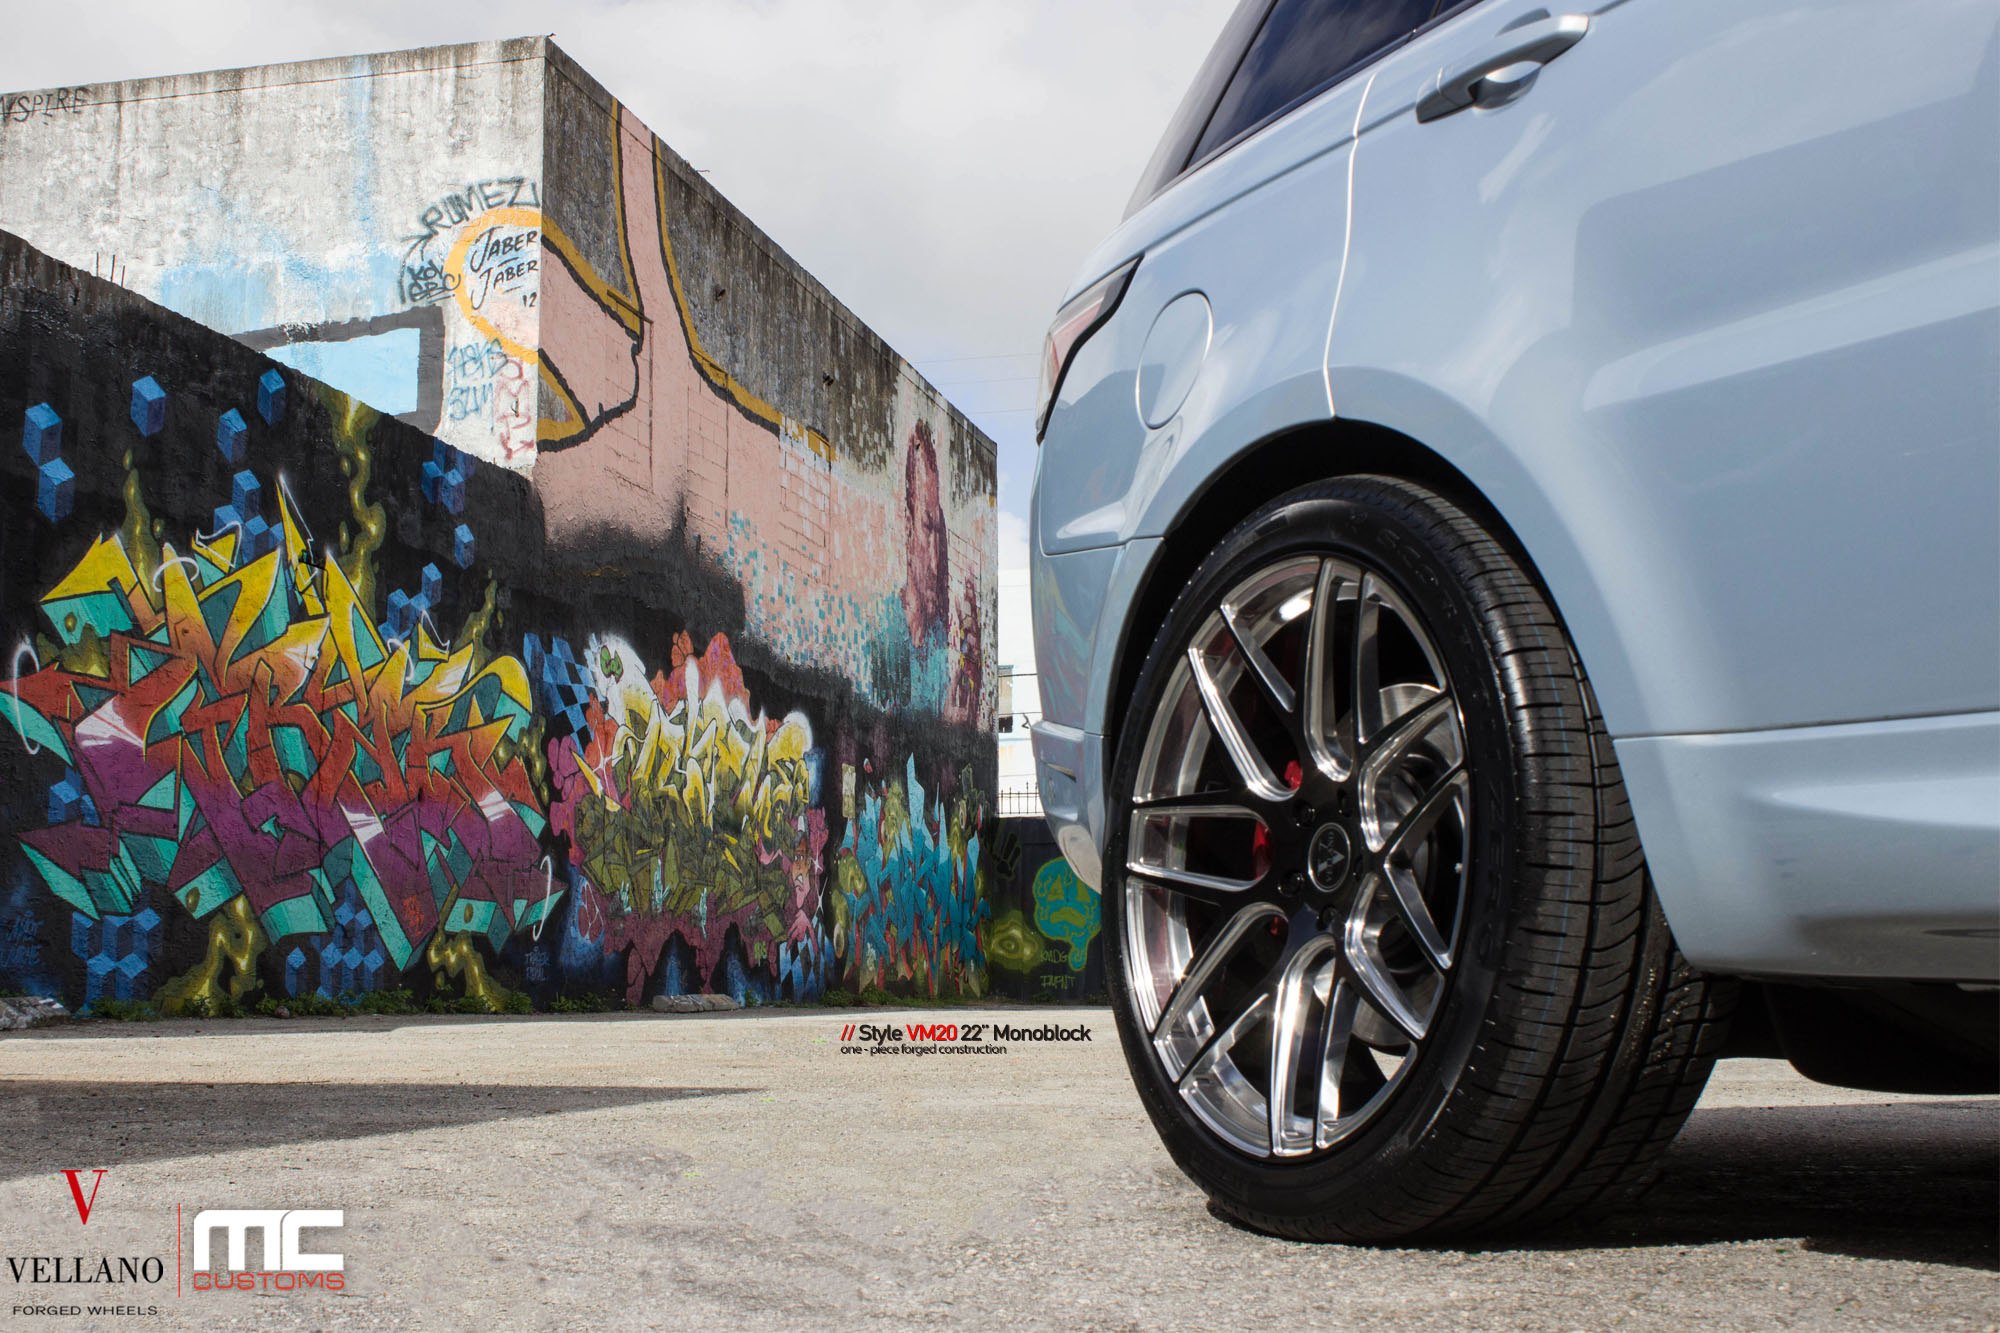 Blue Range Rover Sport with 22 Inch Vellano Rims - Photo by Vellano